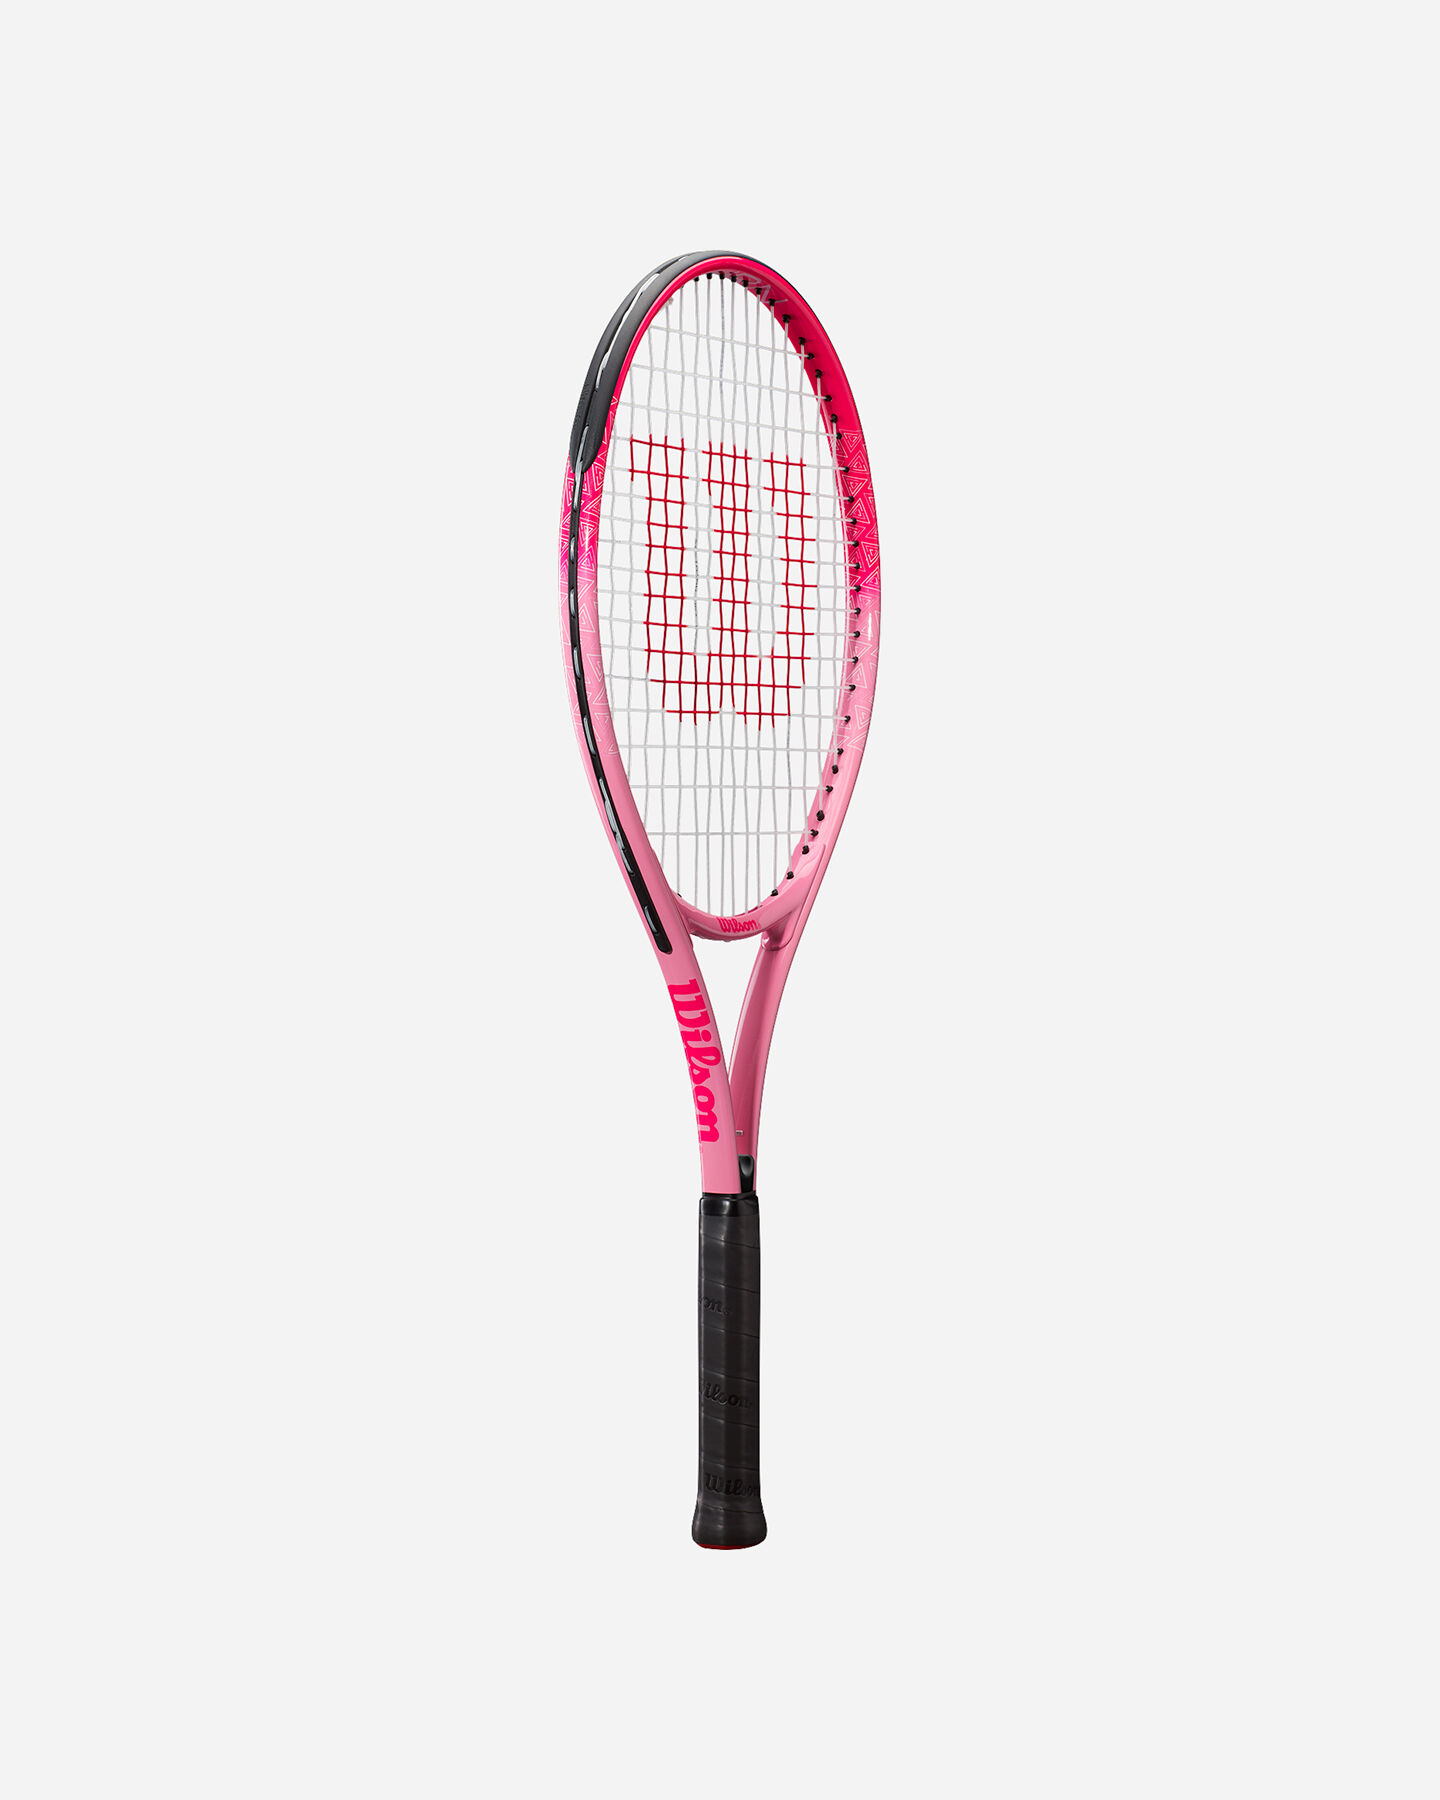  Racchetta tennis WILSON BURN PINK 25 JR S5344158|UNI|25 scatto 1